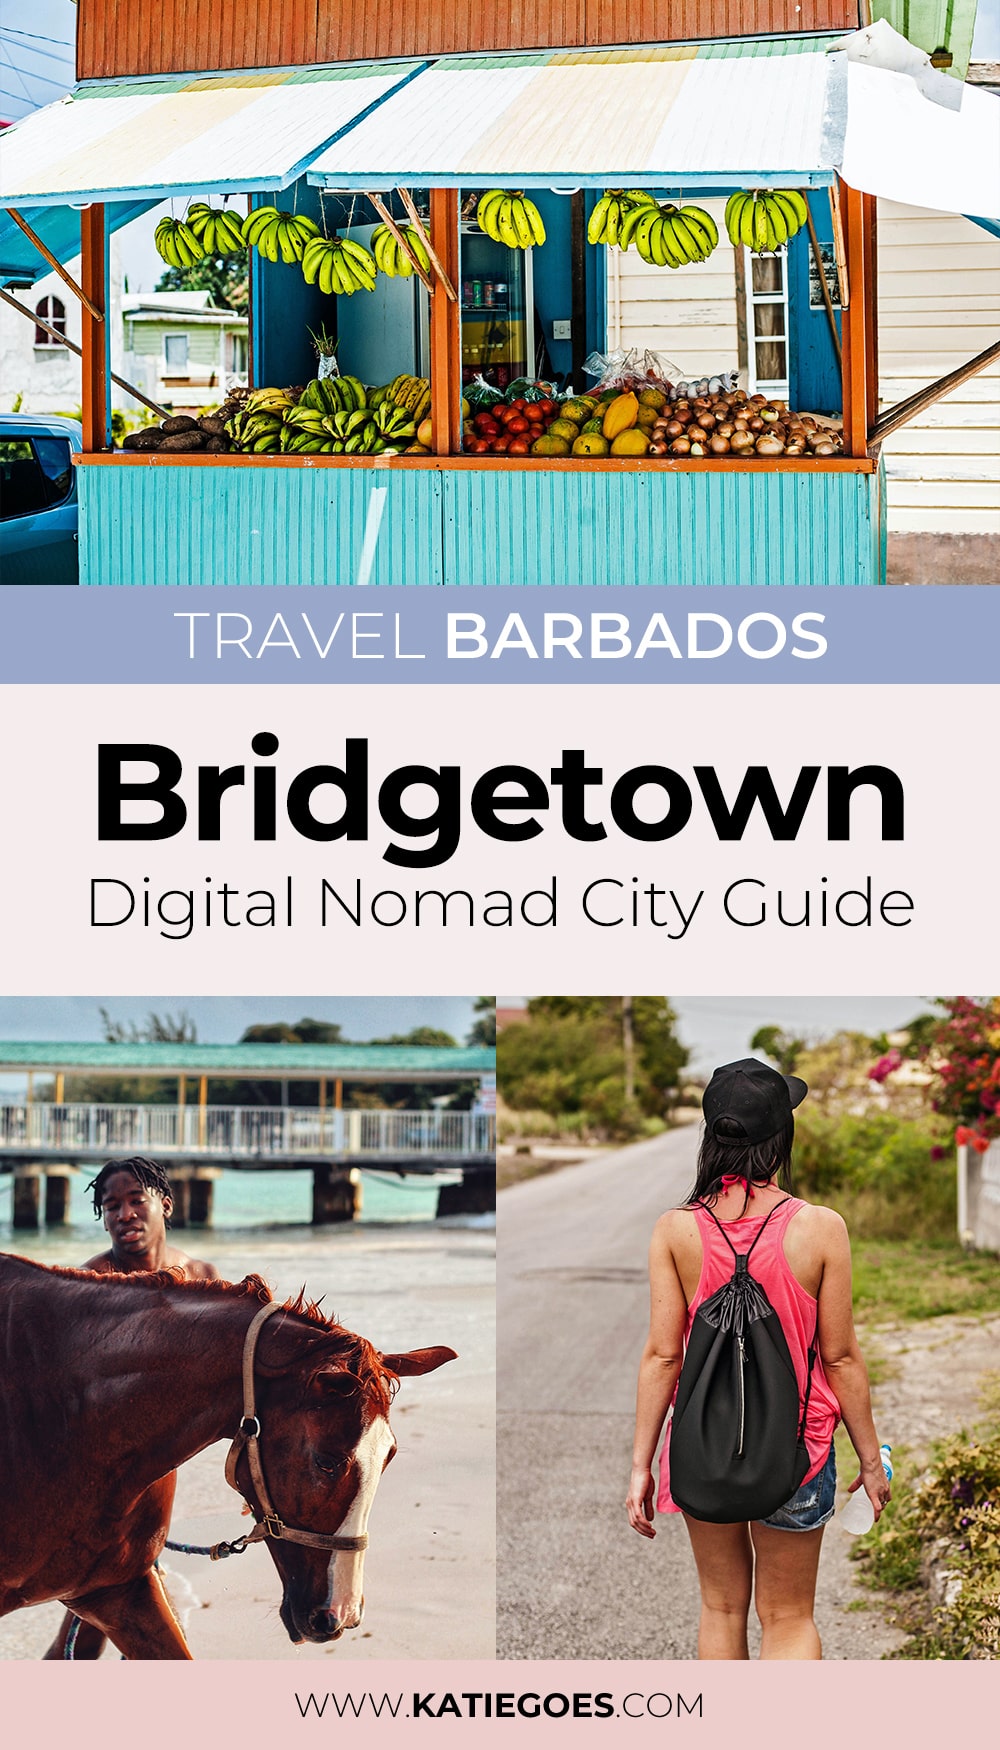 Travel Barbados: Bridgetown Digital Nomad City Guide